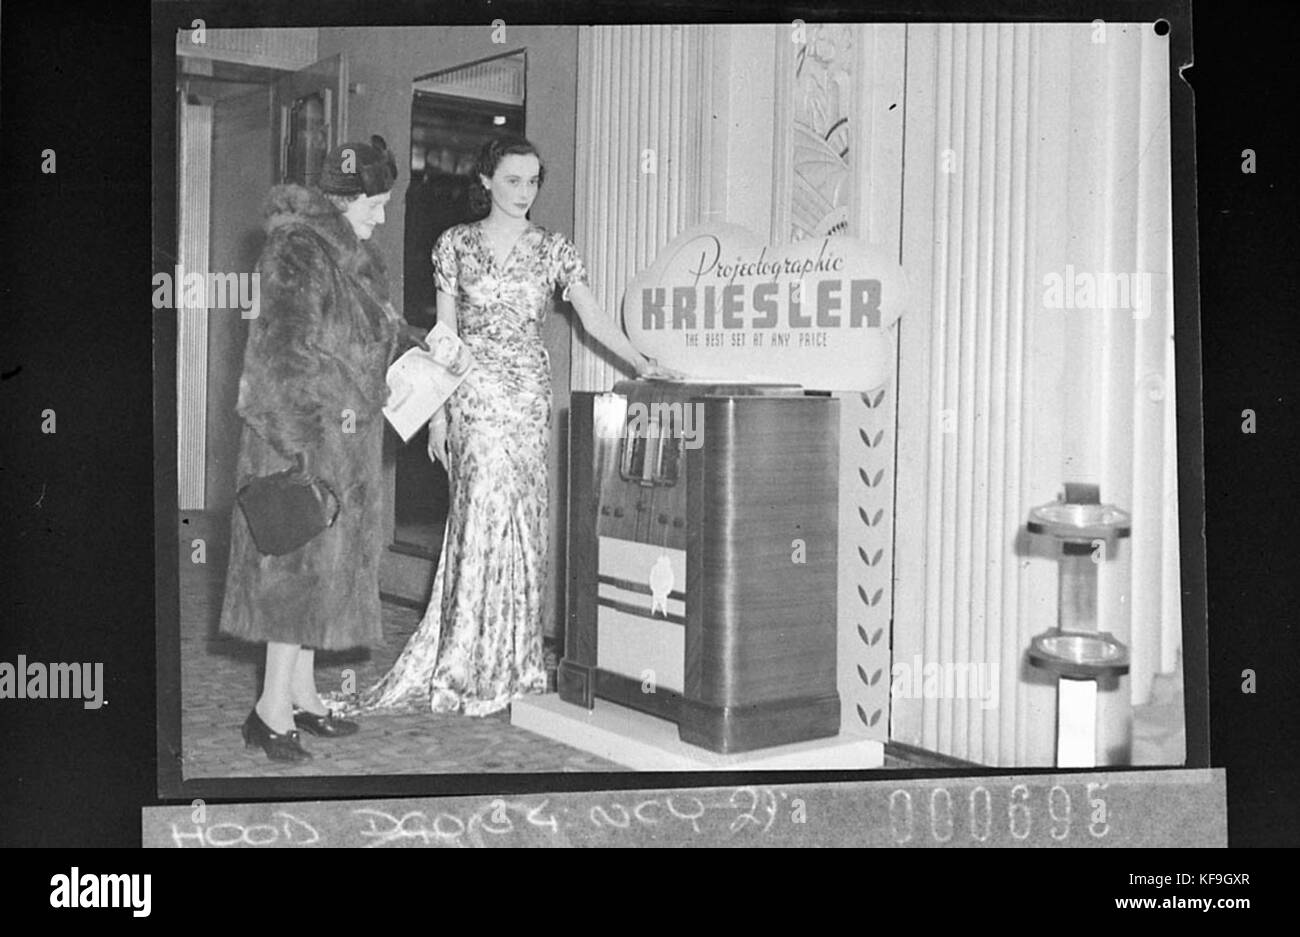 11656 Kriesler radio display at Embassy Theatre for Radio Retailer Usherette demonstrates Projectographic Kriesler radio Stock Photo